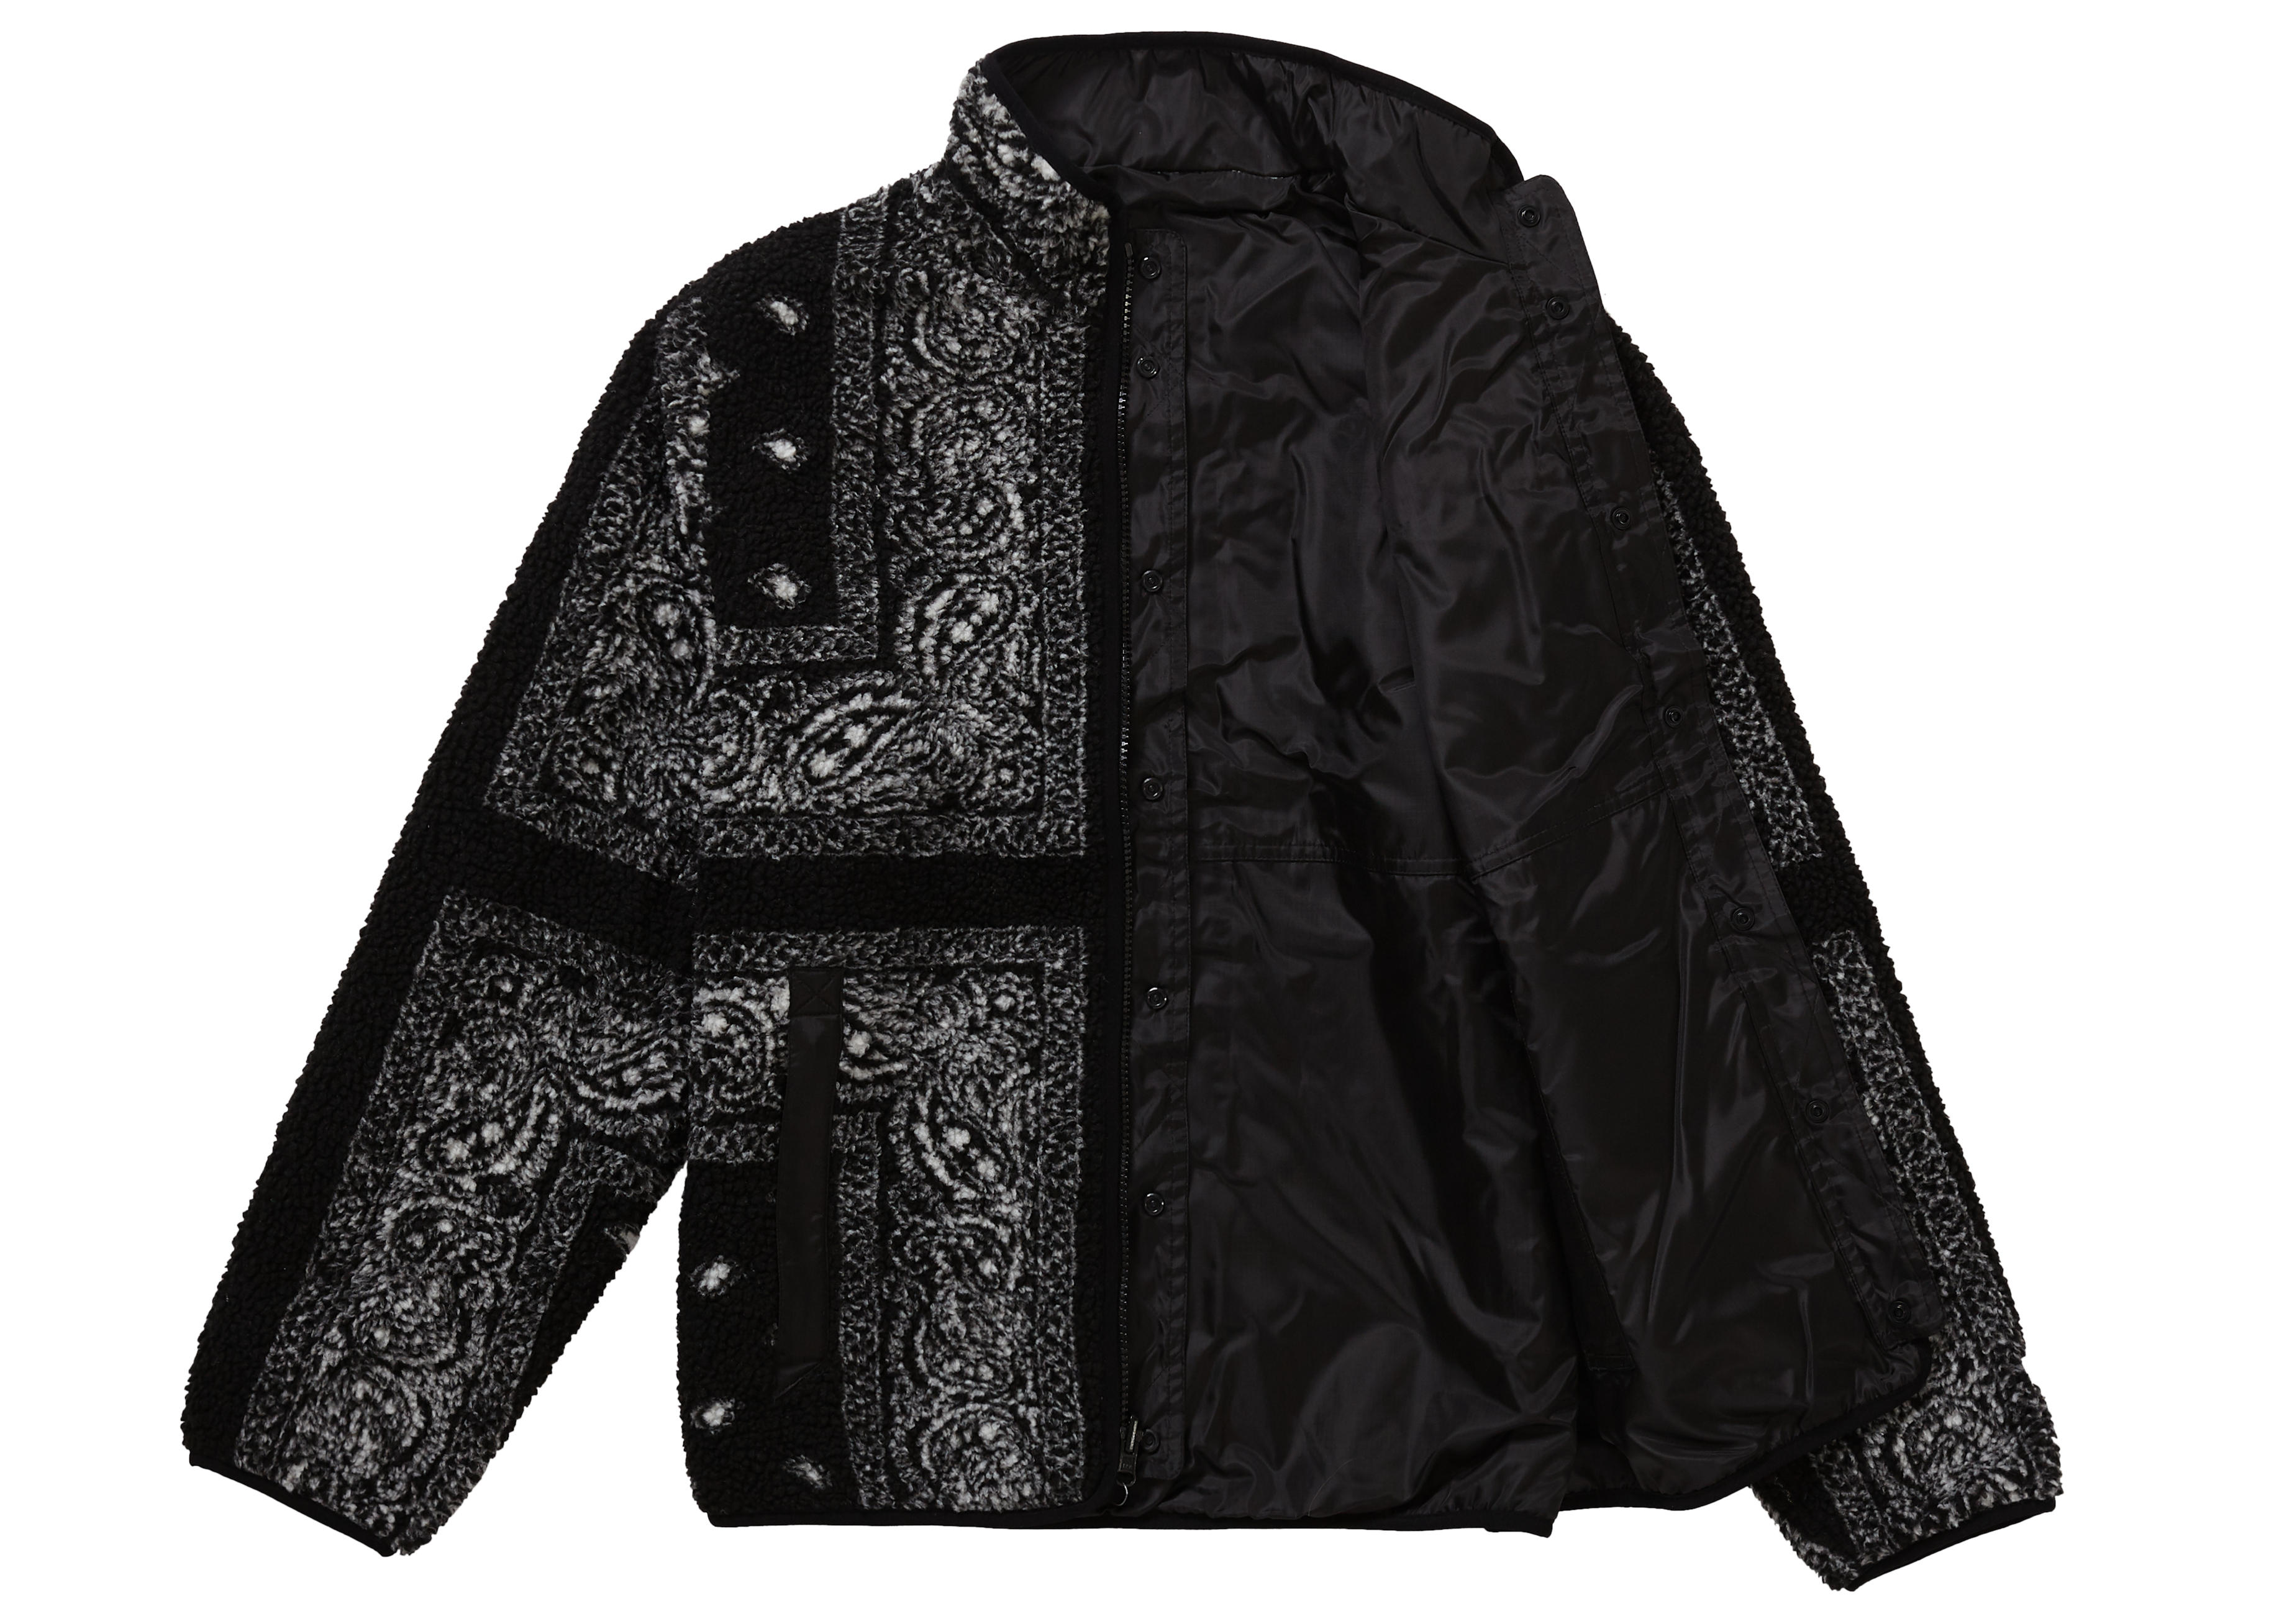 Supreme Reversible Bandana Fleece Jacket Black Men's - FW19 - US